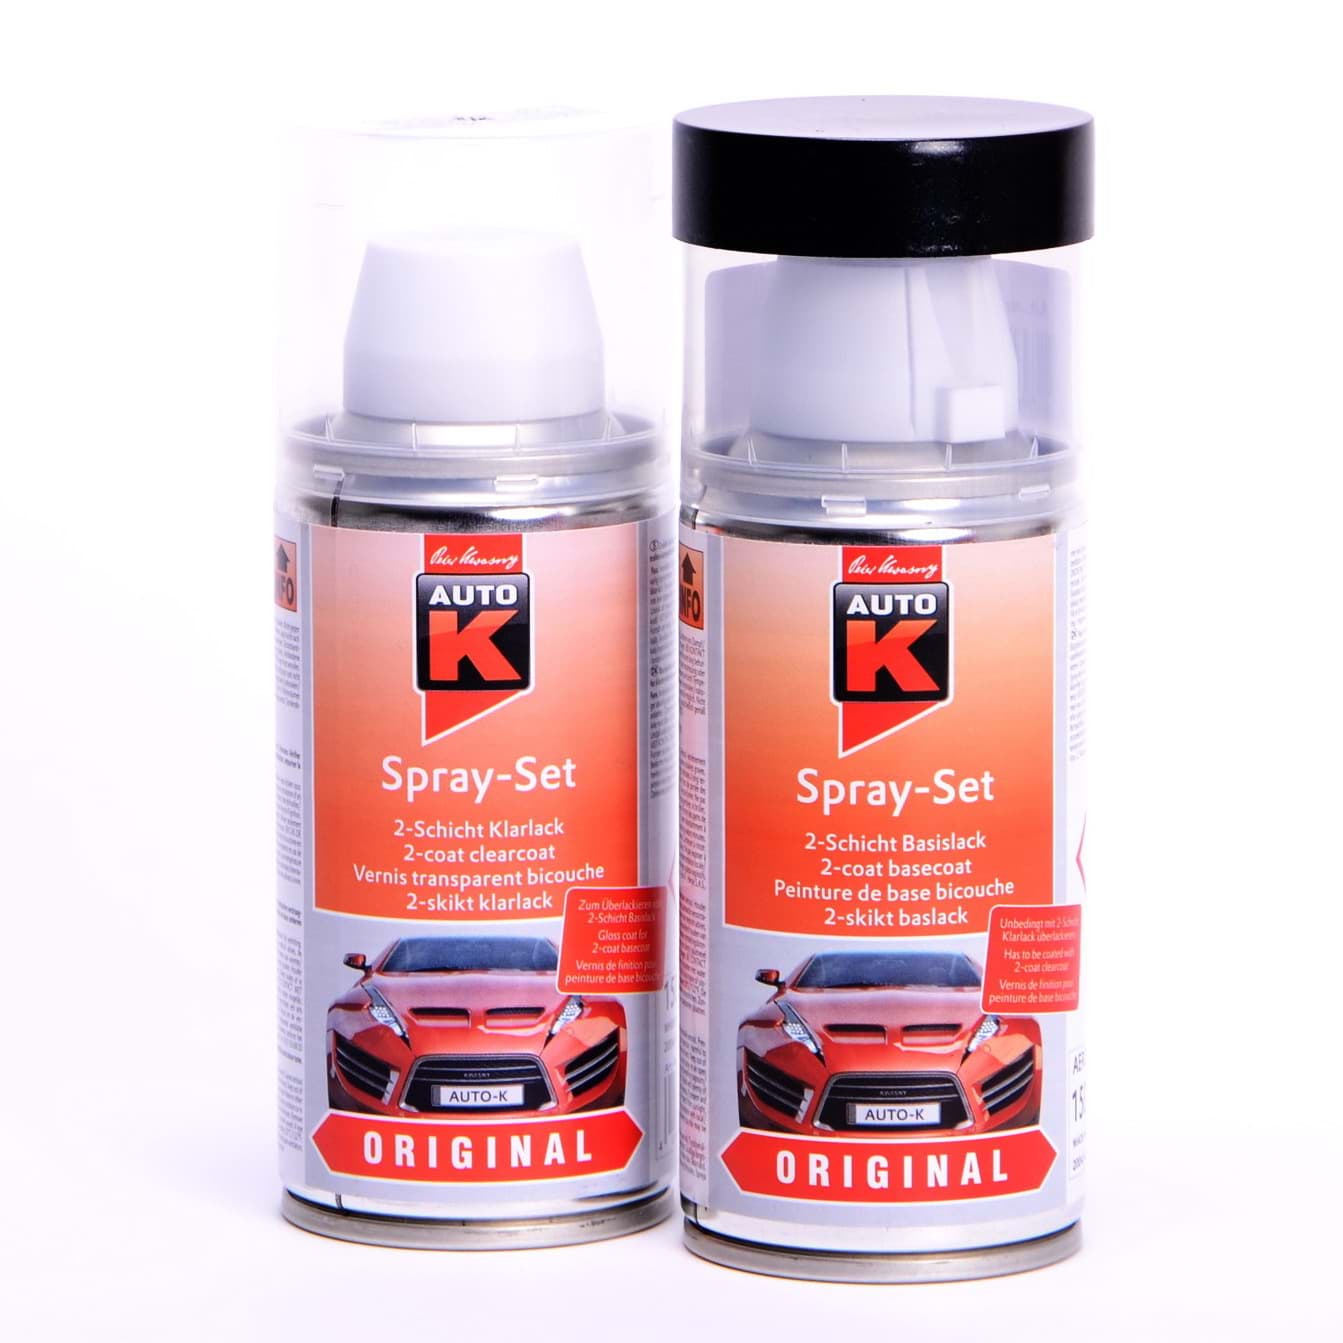 Picture of Auto-K Spray-Set Autolack für Opel 272 Miamiblau 21365 